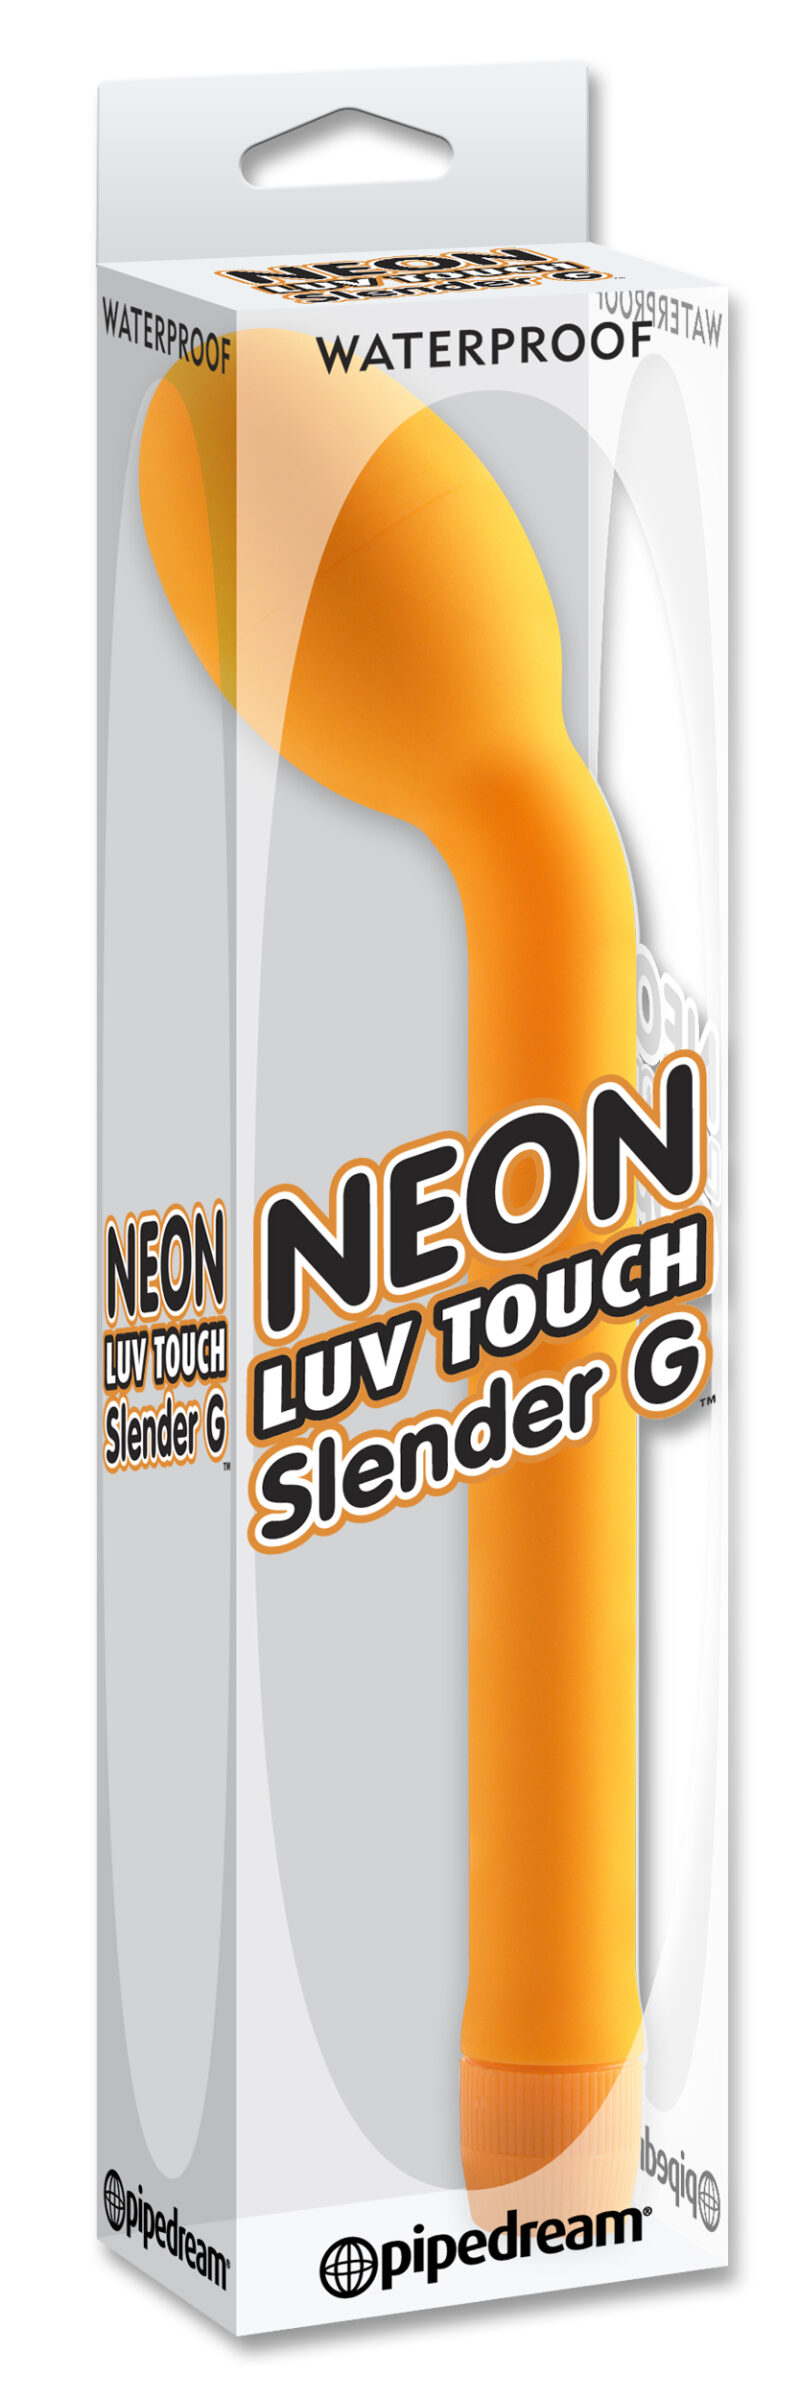 Pipedream Neon Luv Touch Slender G Vibrator Orange